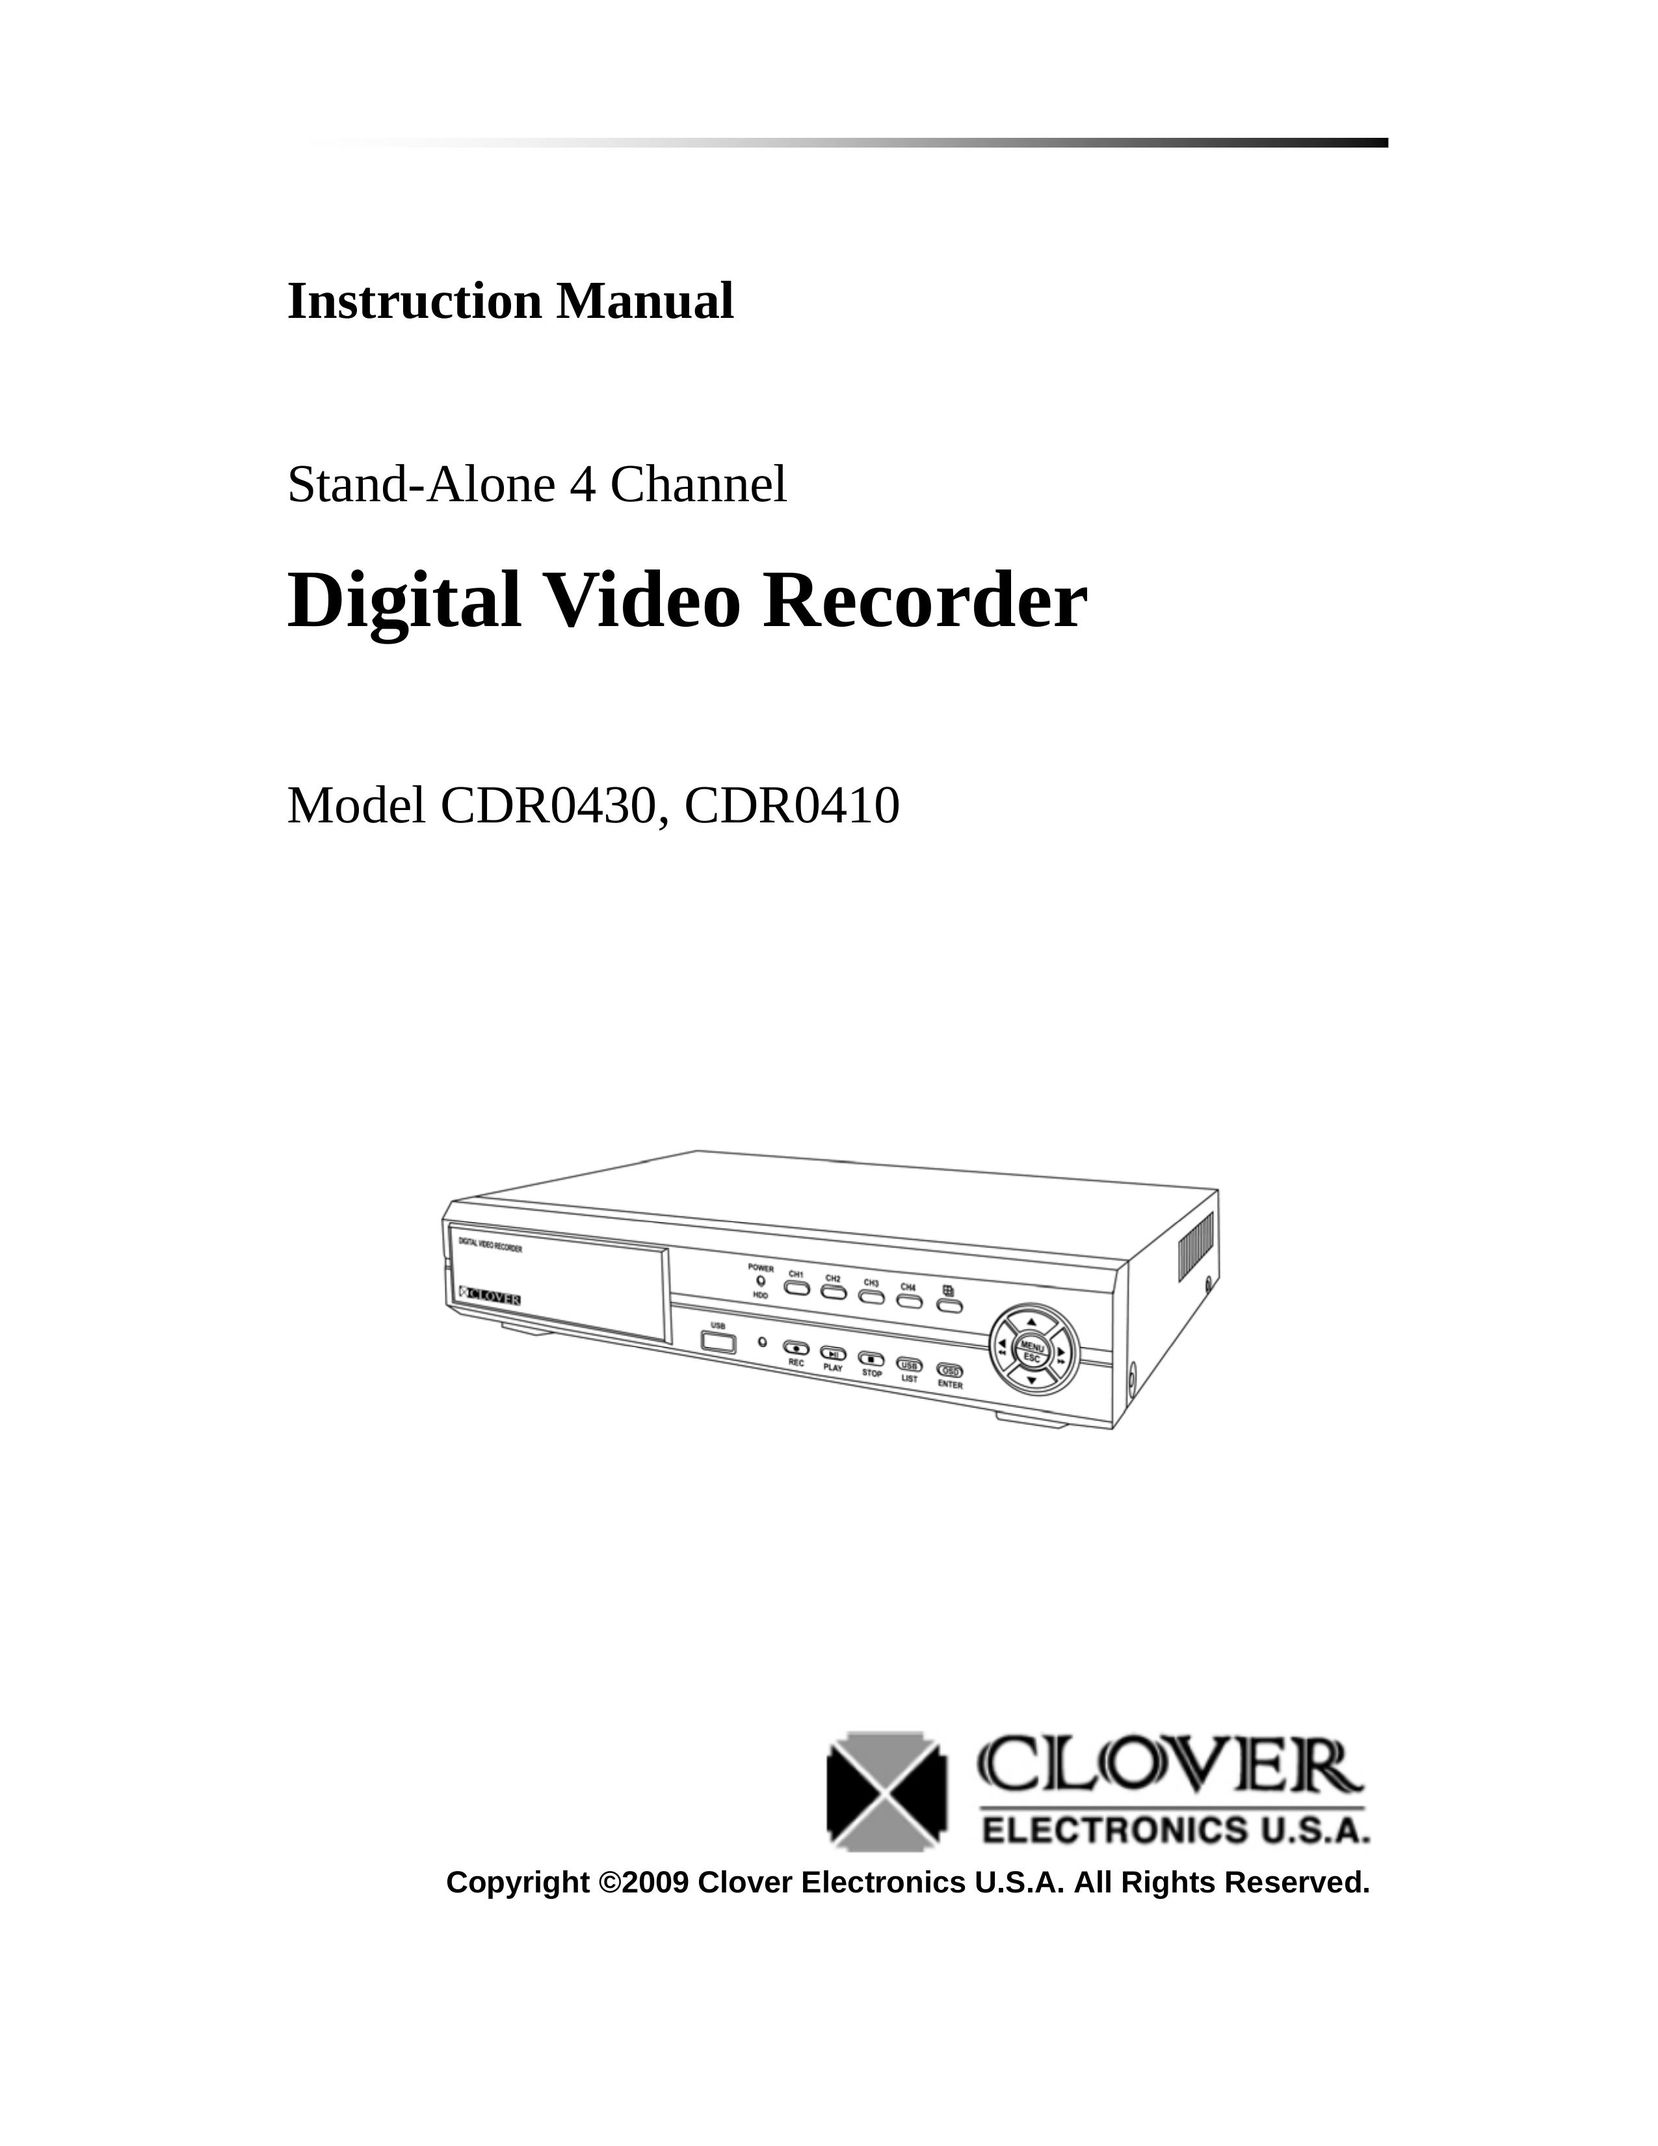 Clover Electronics CDR0410 DVR User Manual